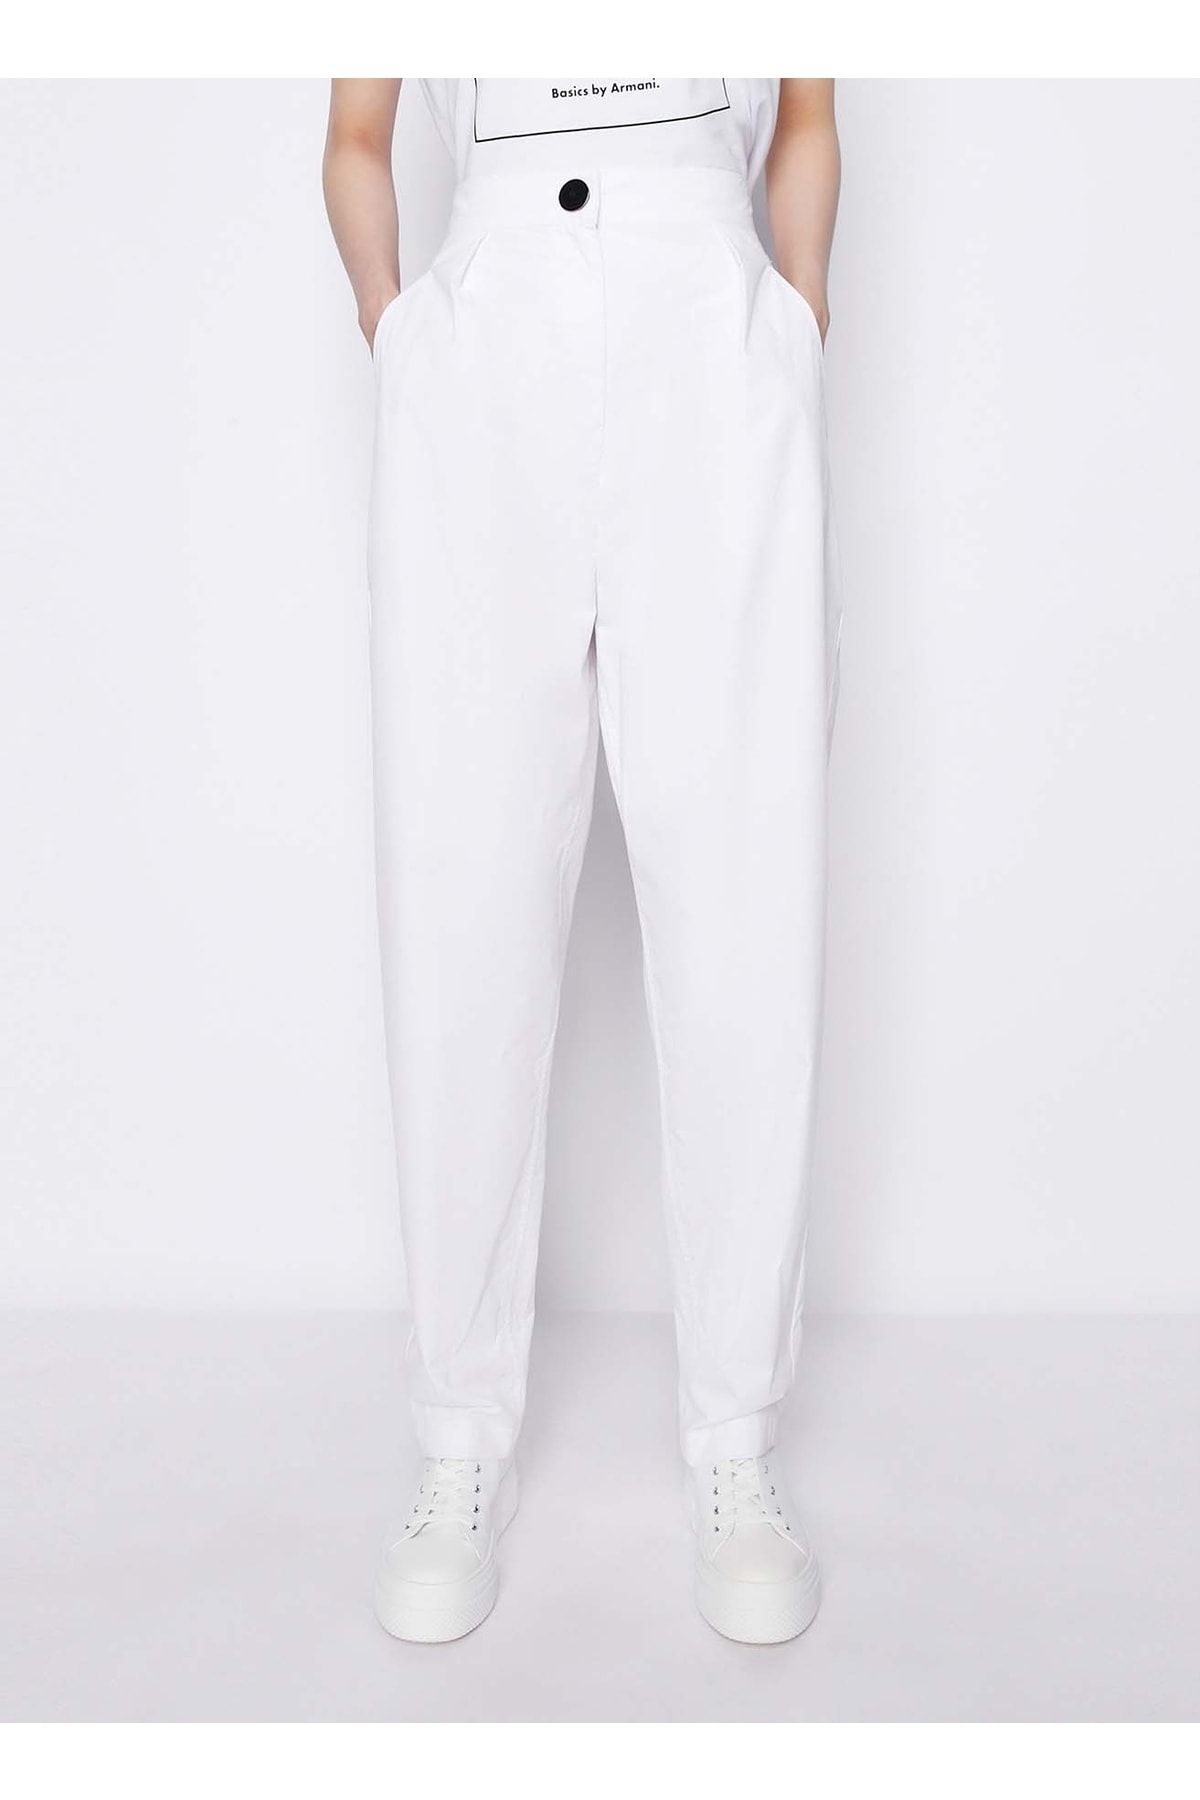 Armani Exchange Yüksek Bel Normal Beyaz Kadın Pantolon 3ryp01